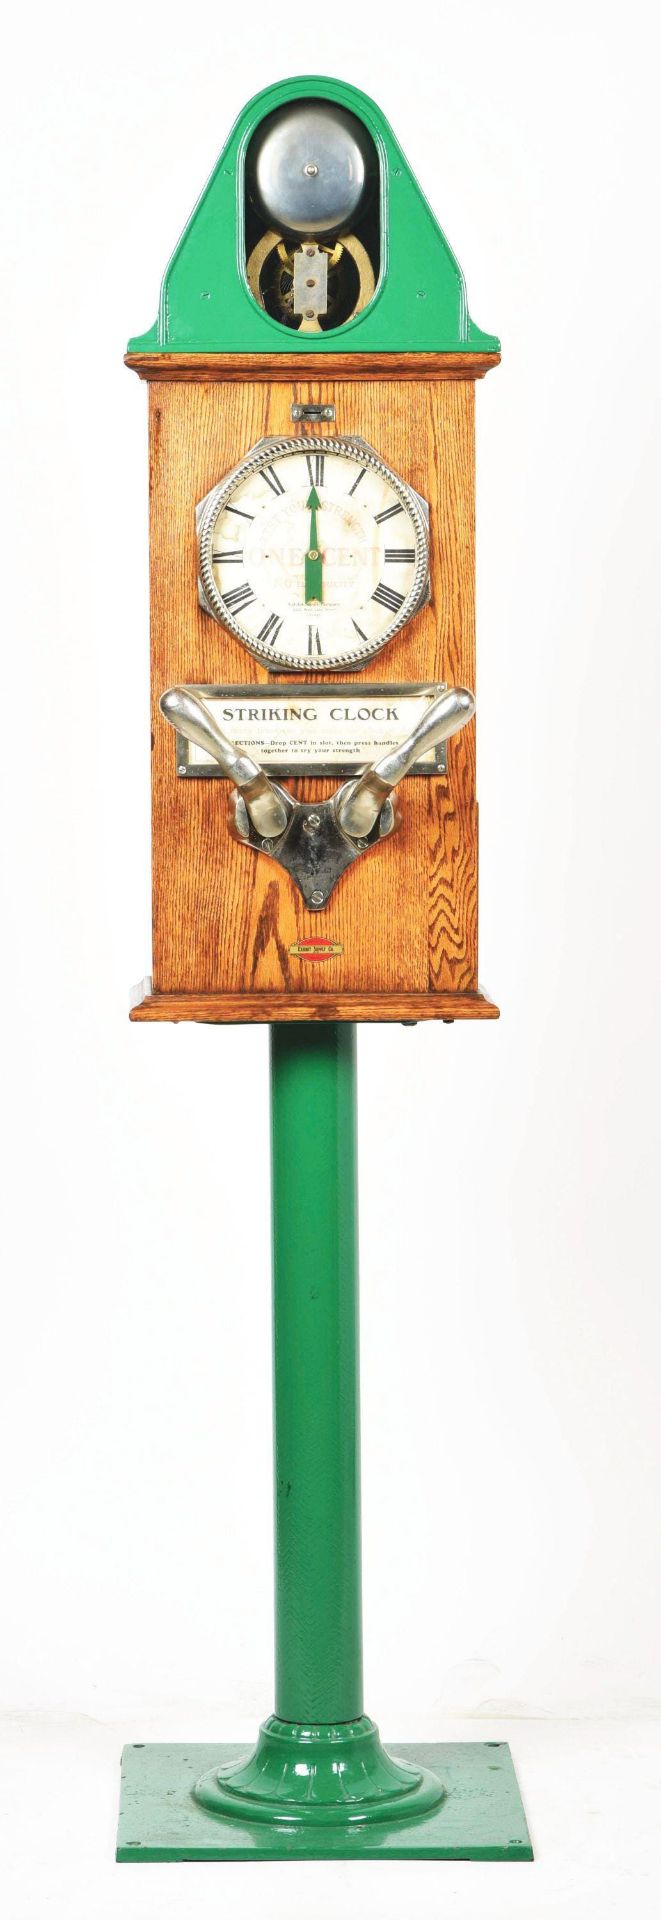 1¢ Striking Clock Mechanical Strength Tester Arcade - Image 2 of 6